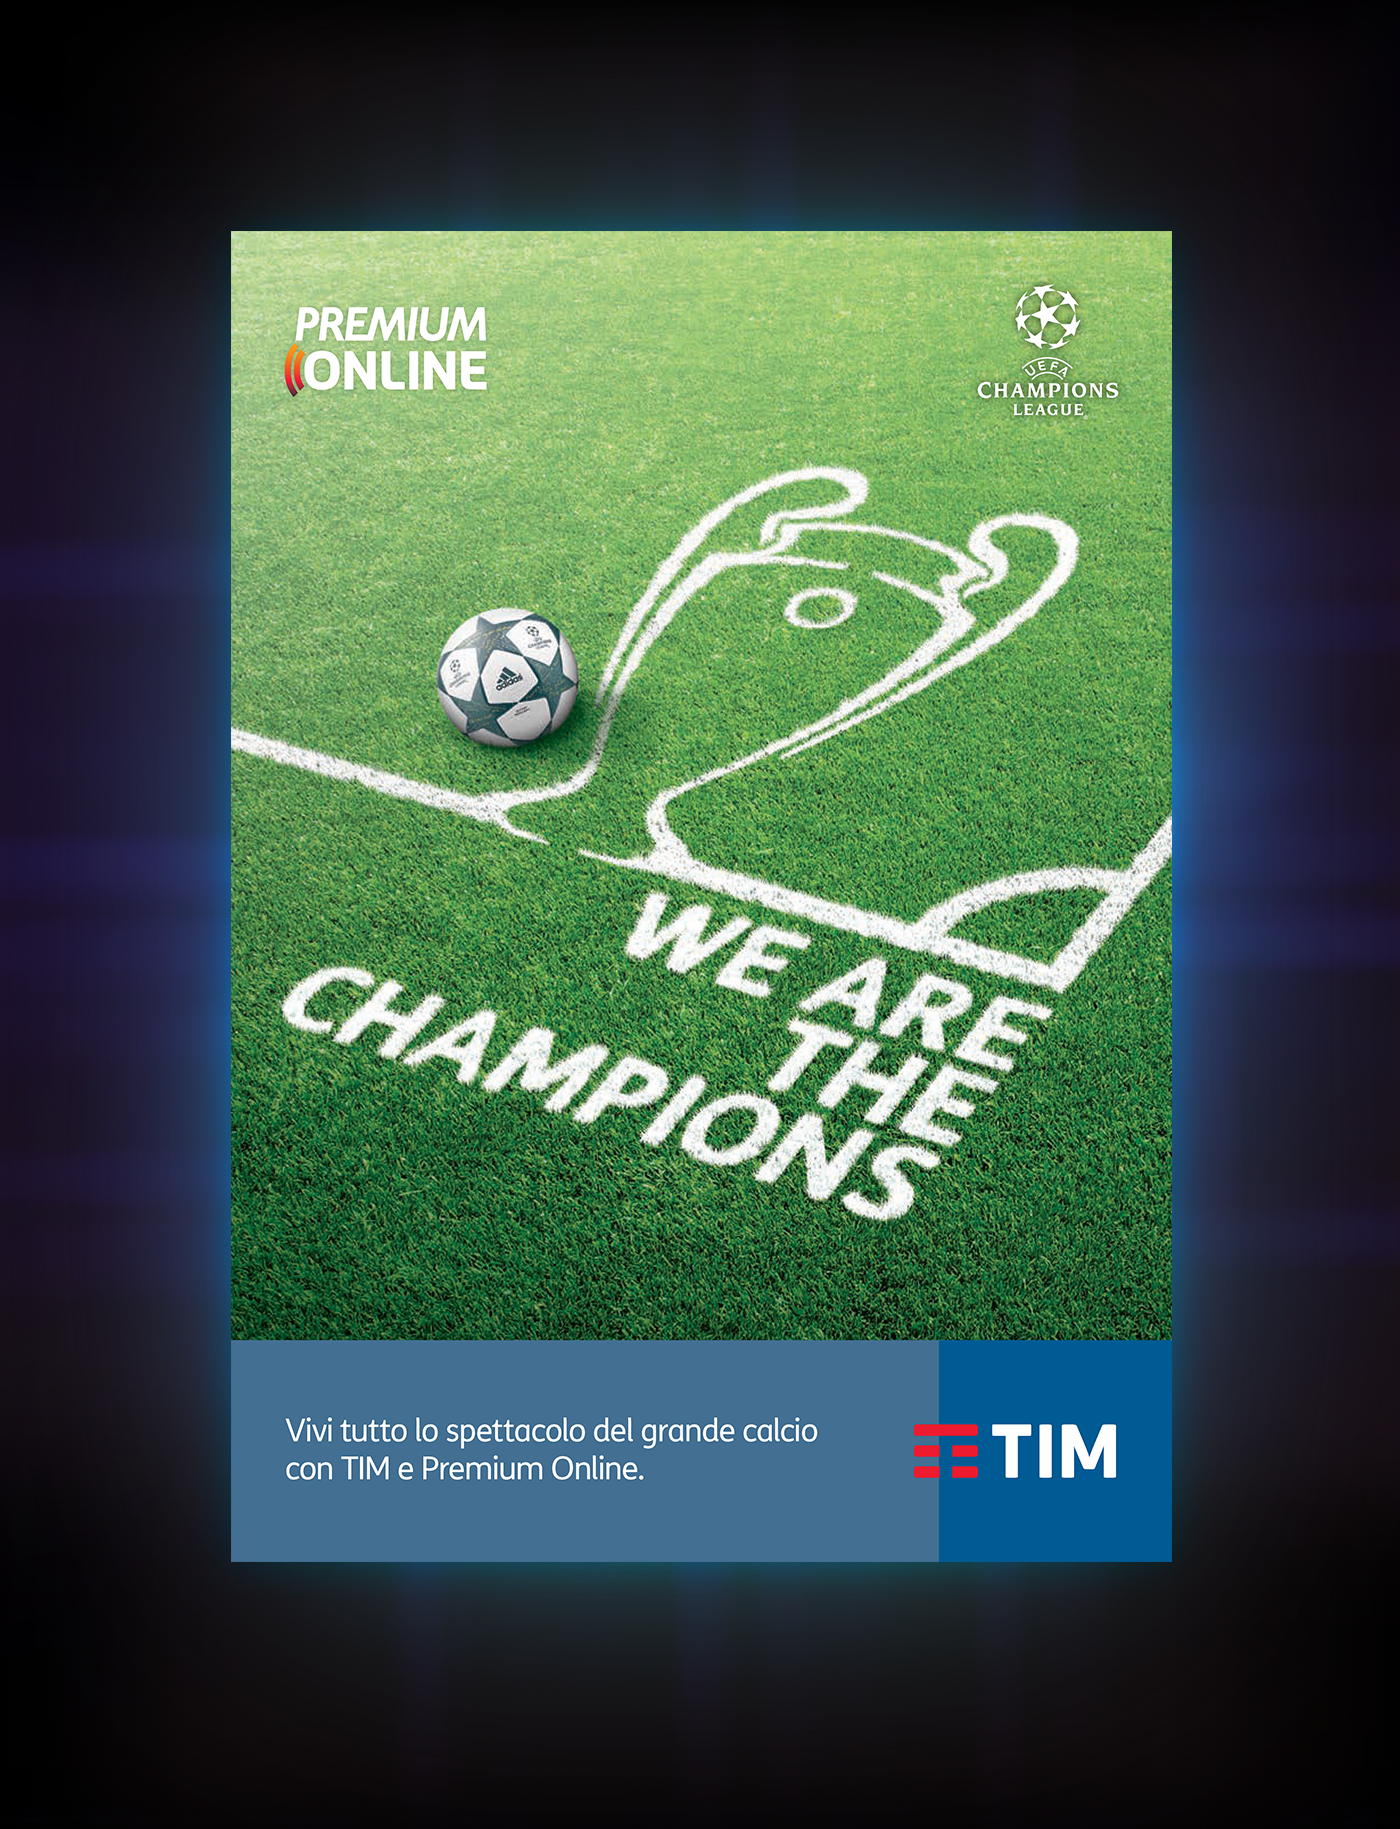 TIM Telecom Mediaset champions league premium soccer football trophy ball